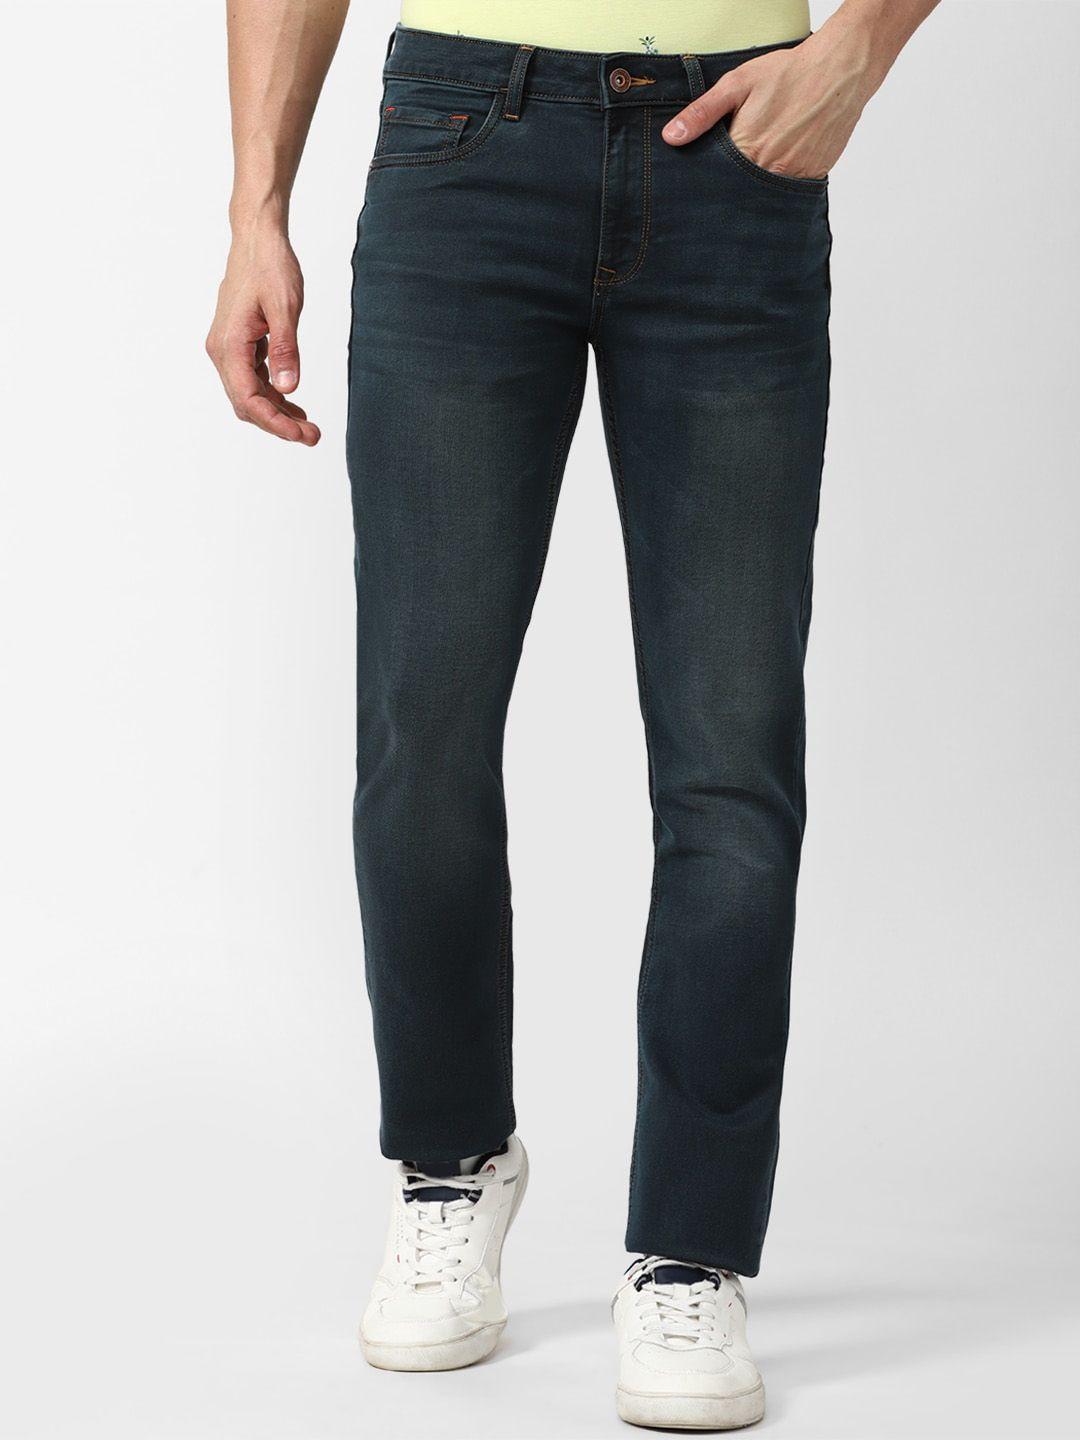 simon-carter-london-men-mid-rise-slim-fit-light-fade-jeans